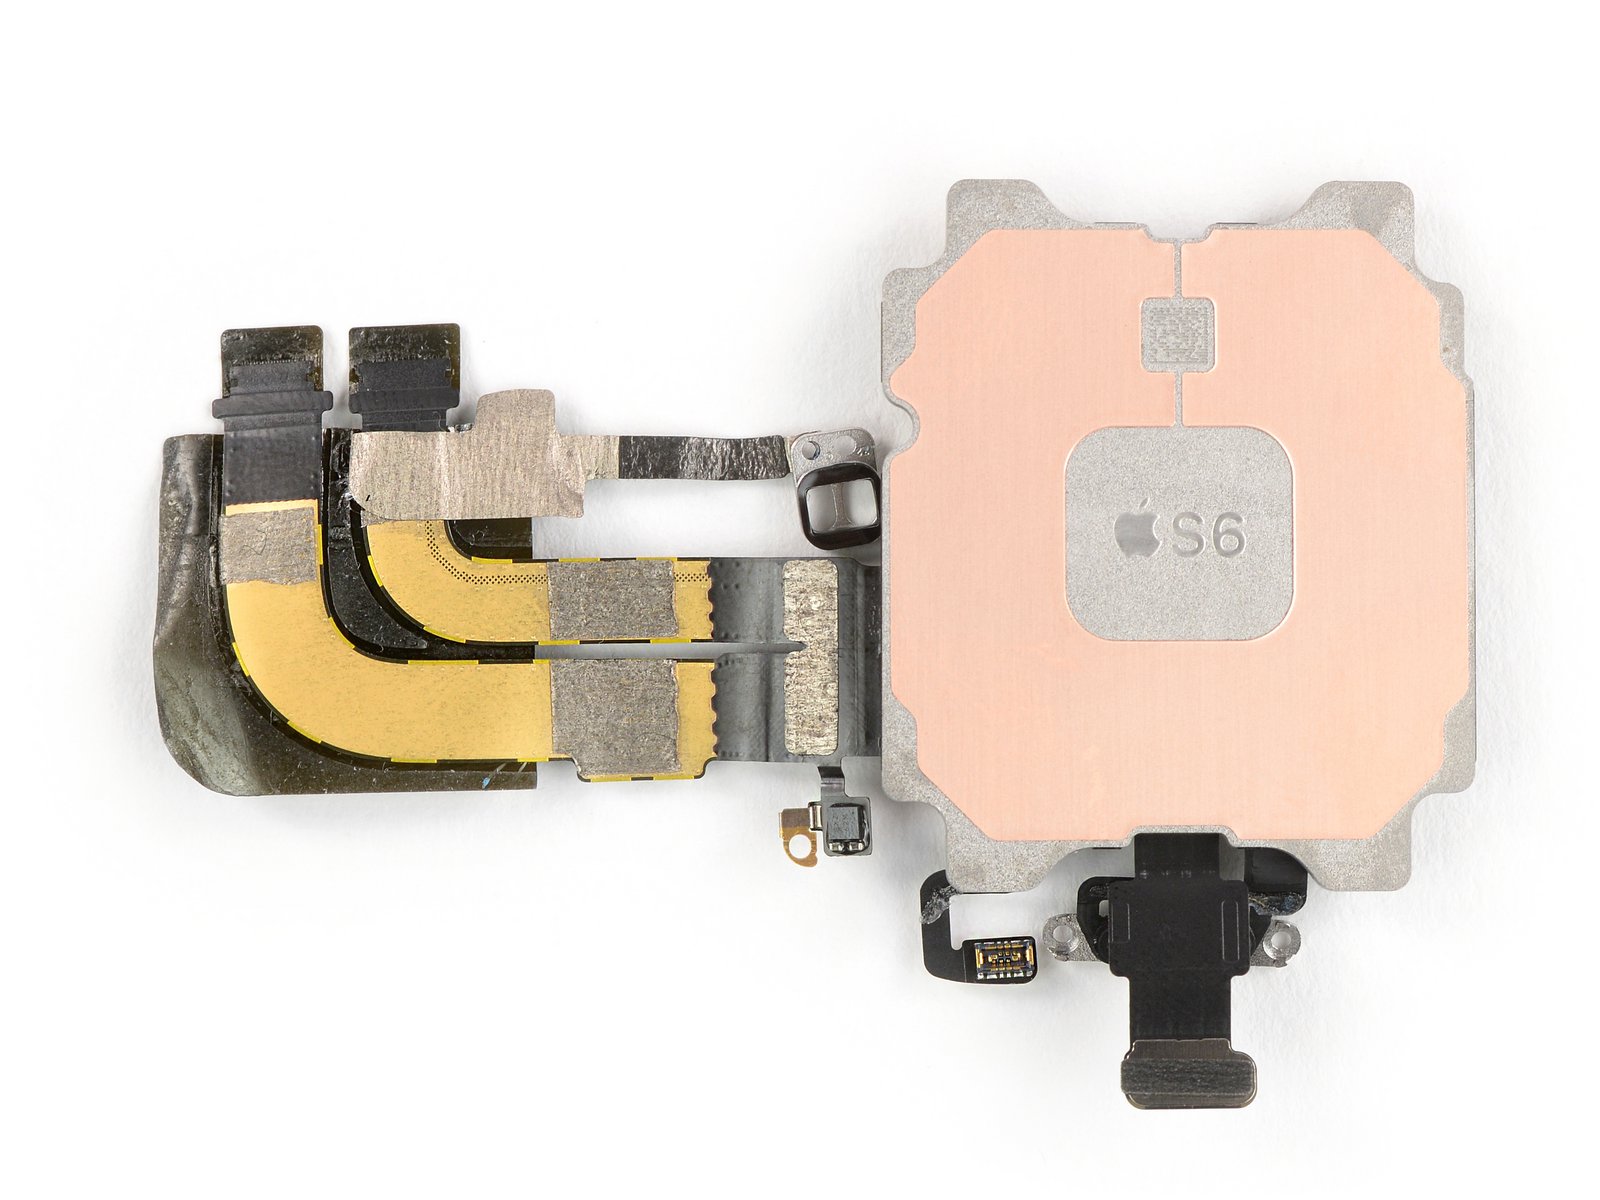 Chip S7 trên Apple Watch Series 7